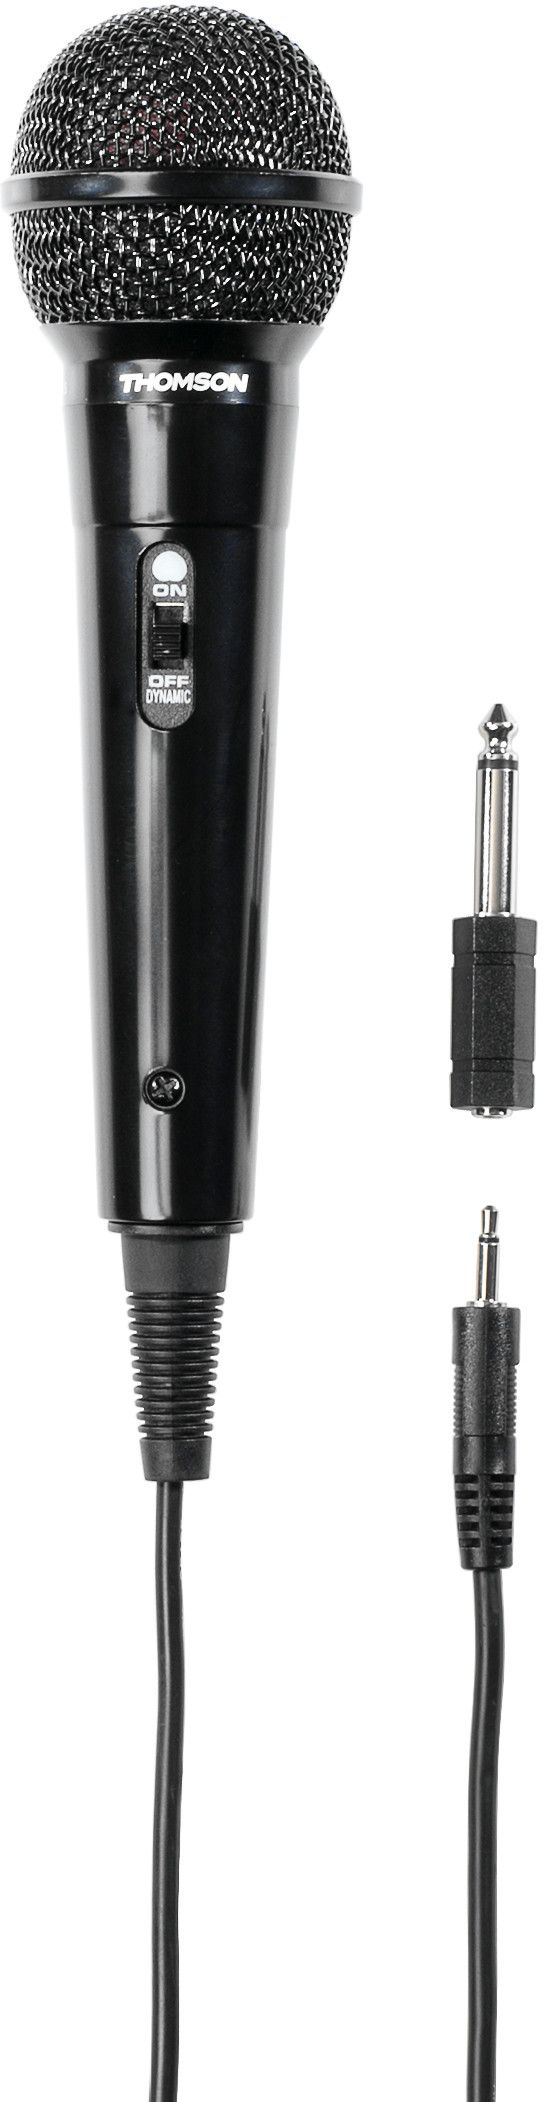 Thomson M135 dynamisk mikrofon - 2-pakning